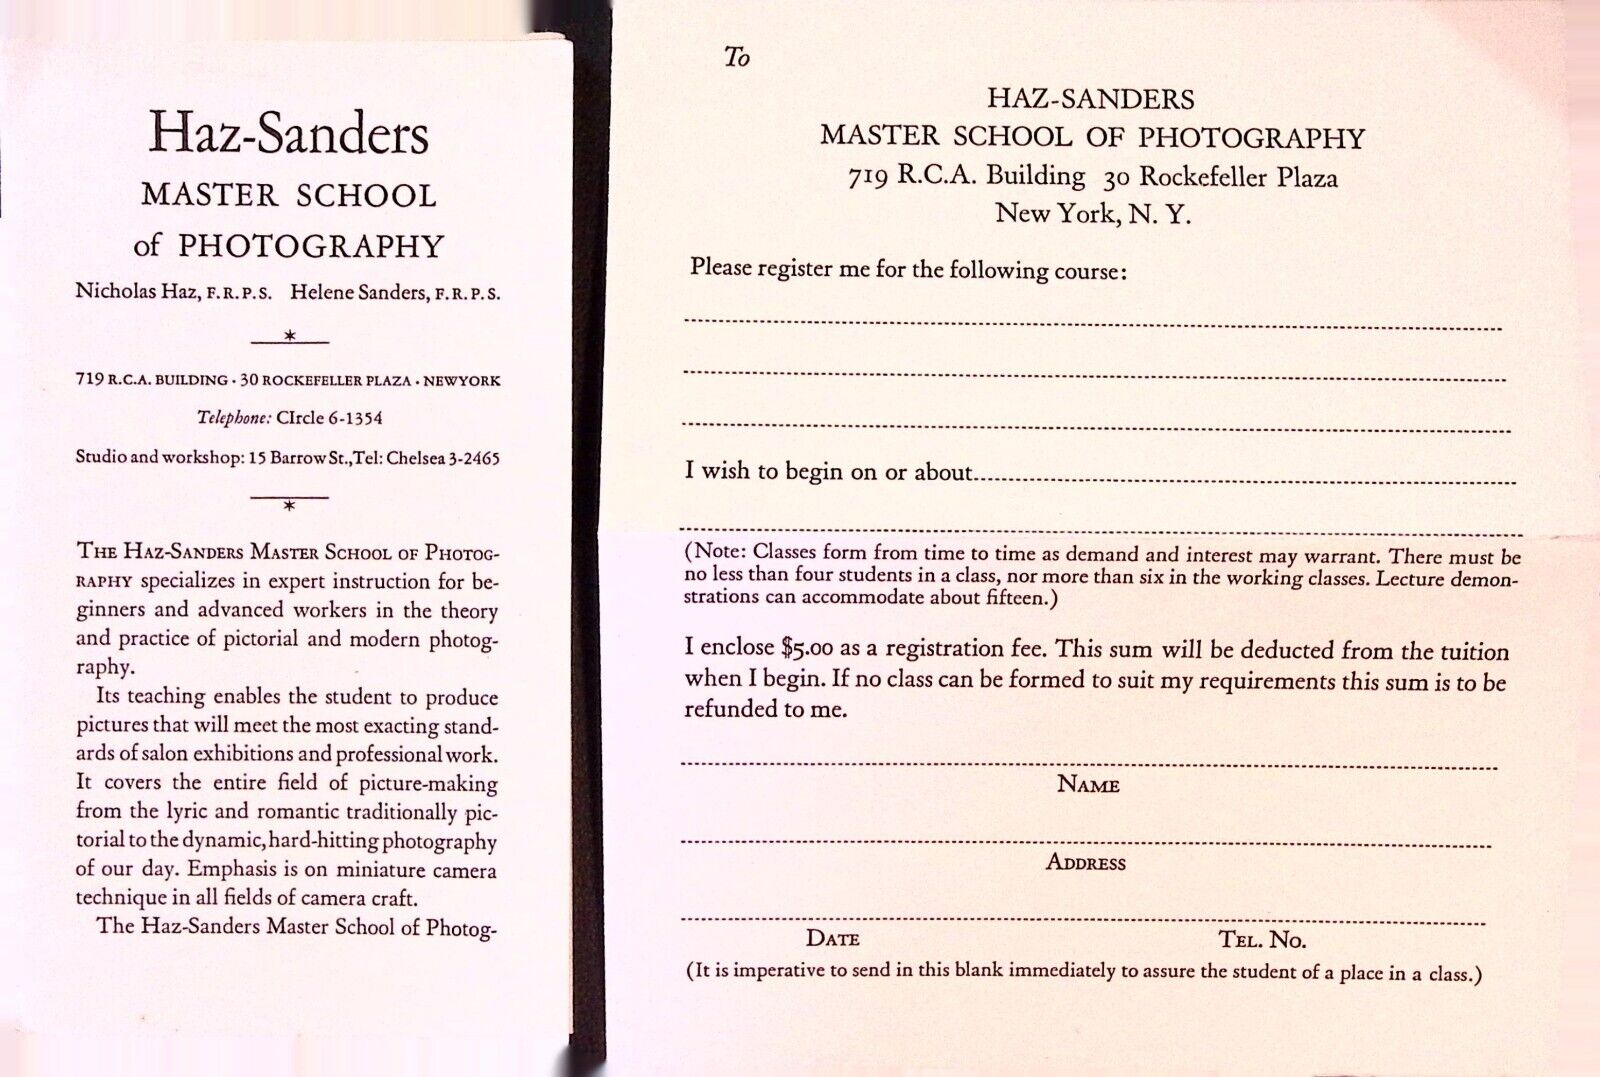 Nicholas Haz Sanders Master School Photography Brochure Applications 1930s NYC